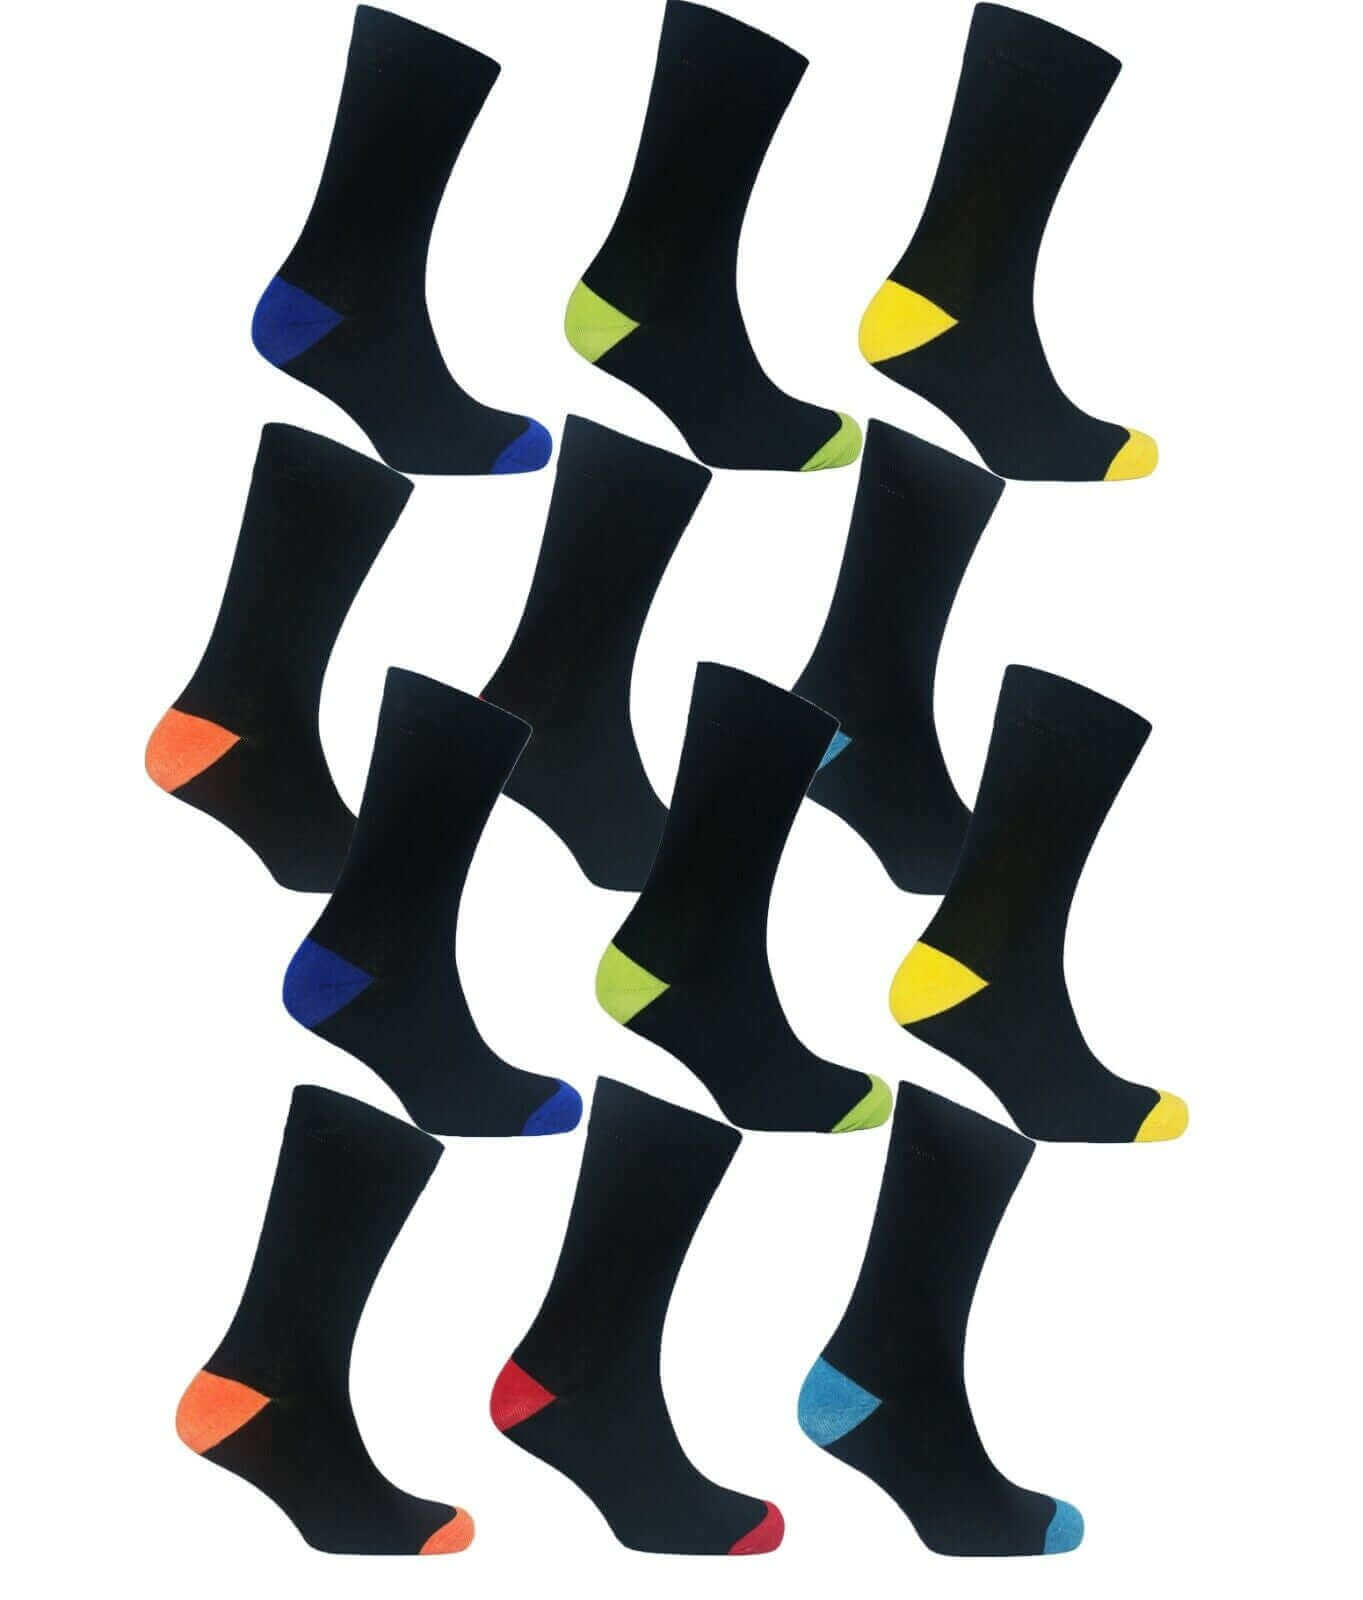 12 Pairs Of Men's Socks Designer Cotton Rich Casual Work Dress Socks, Argyle & Stripe. Buy now for £9.00. A Socks by Sock Stack. 6-11, argyle, assorted, black, boys, casual, comfortable, cotton, diamond, dress socks, elastane, formal wear, mens, multi bla